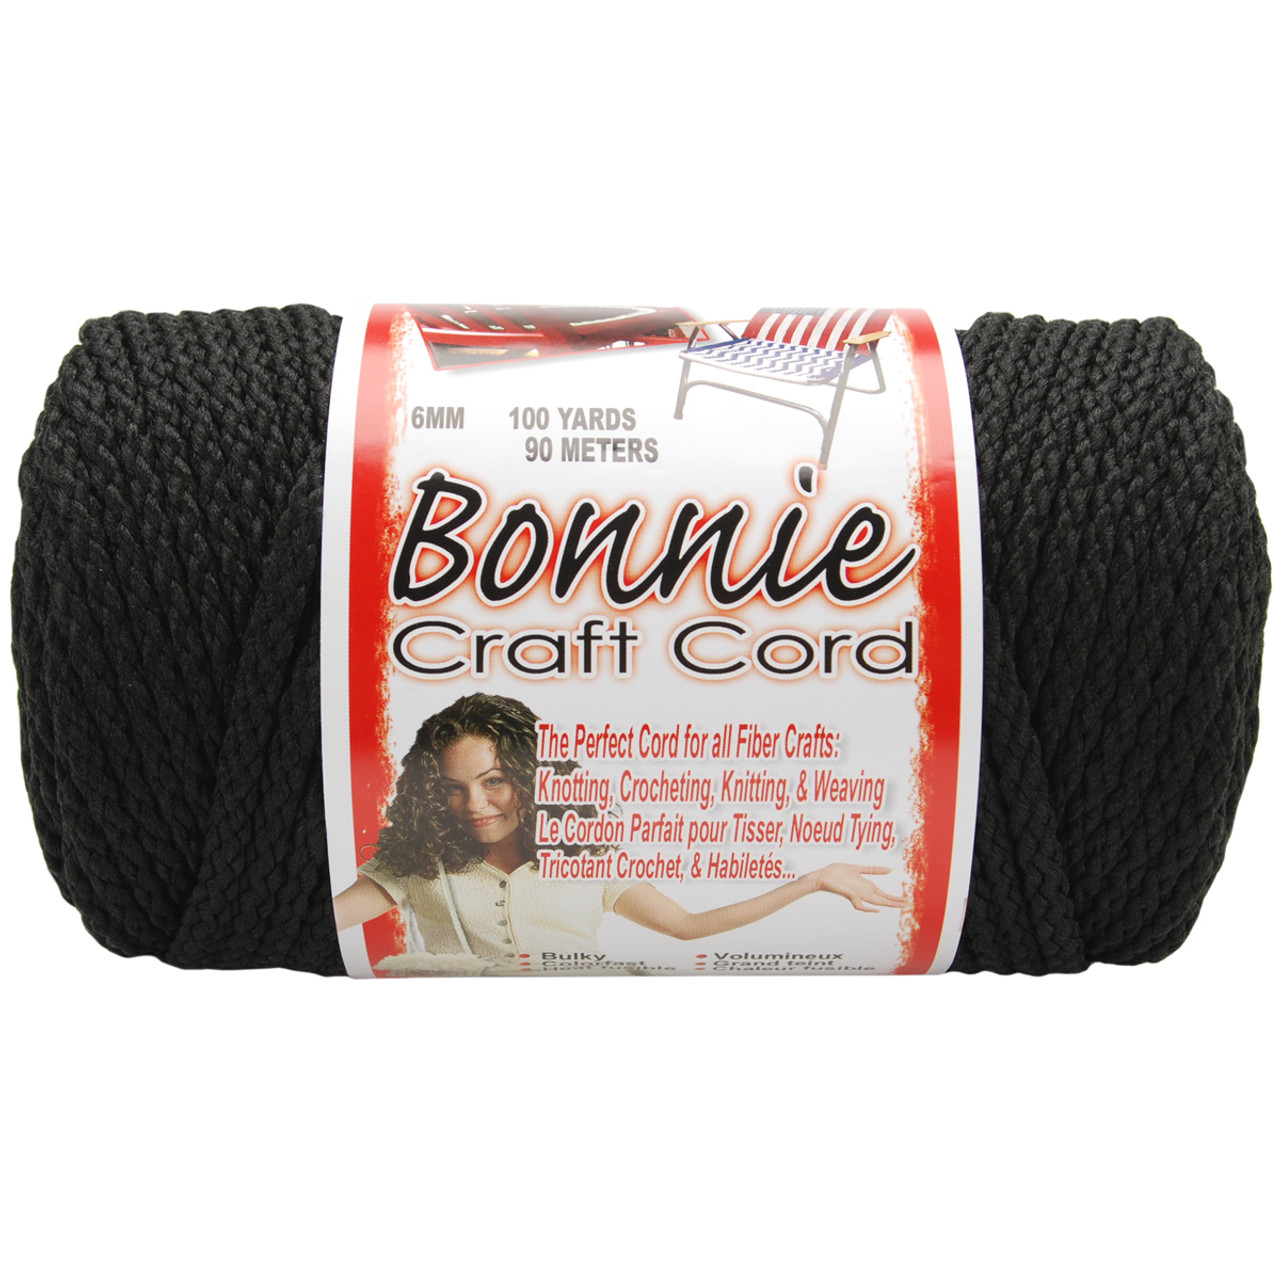 Pepperell Bonnie Macrame Craft Cord 6mmX100yd-Tan BB6-100-006